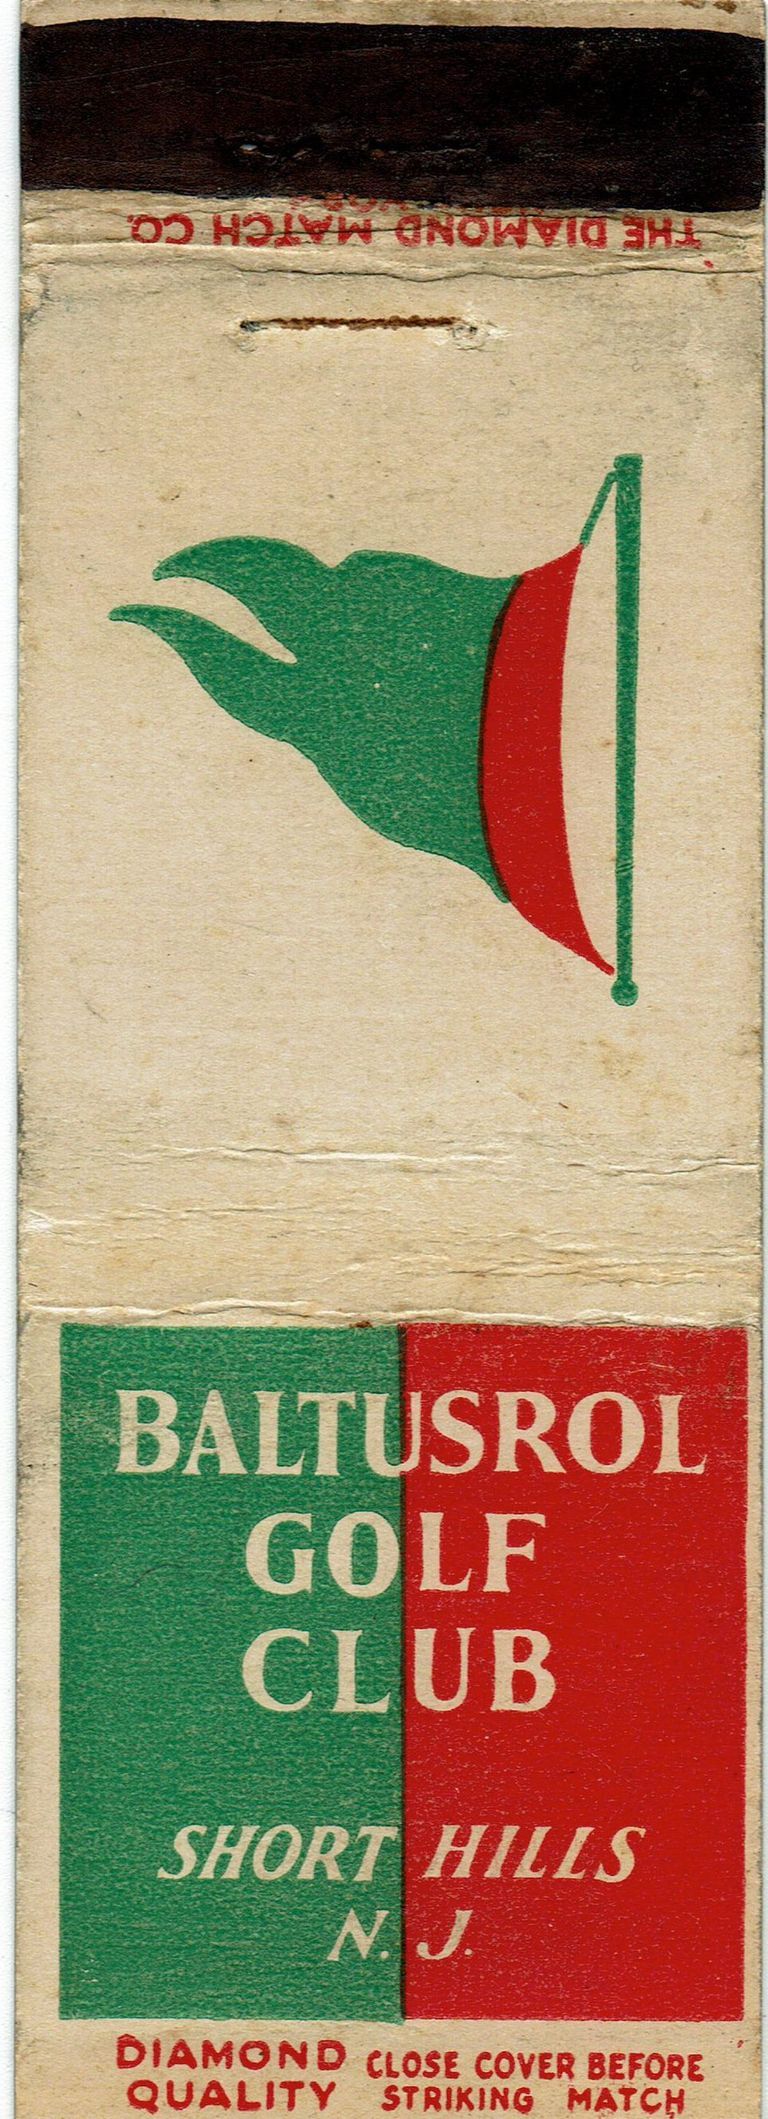          Baltustrol: Baltusrol Golf Club Matchbook Cover, 1930s picture number 1
   